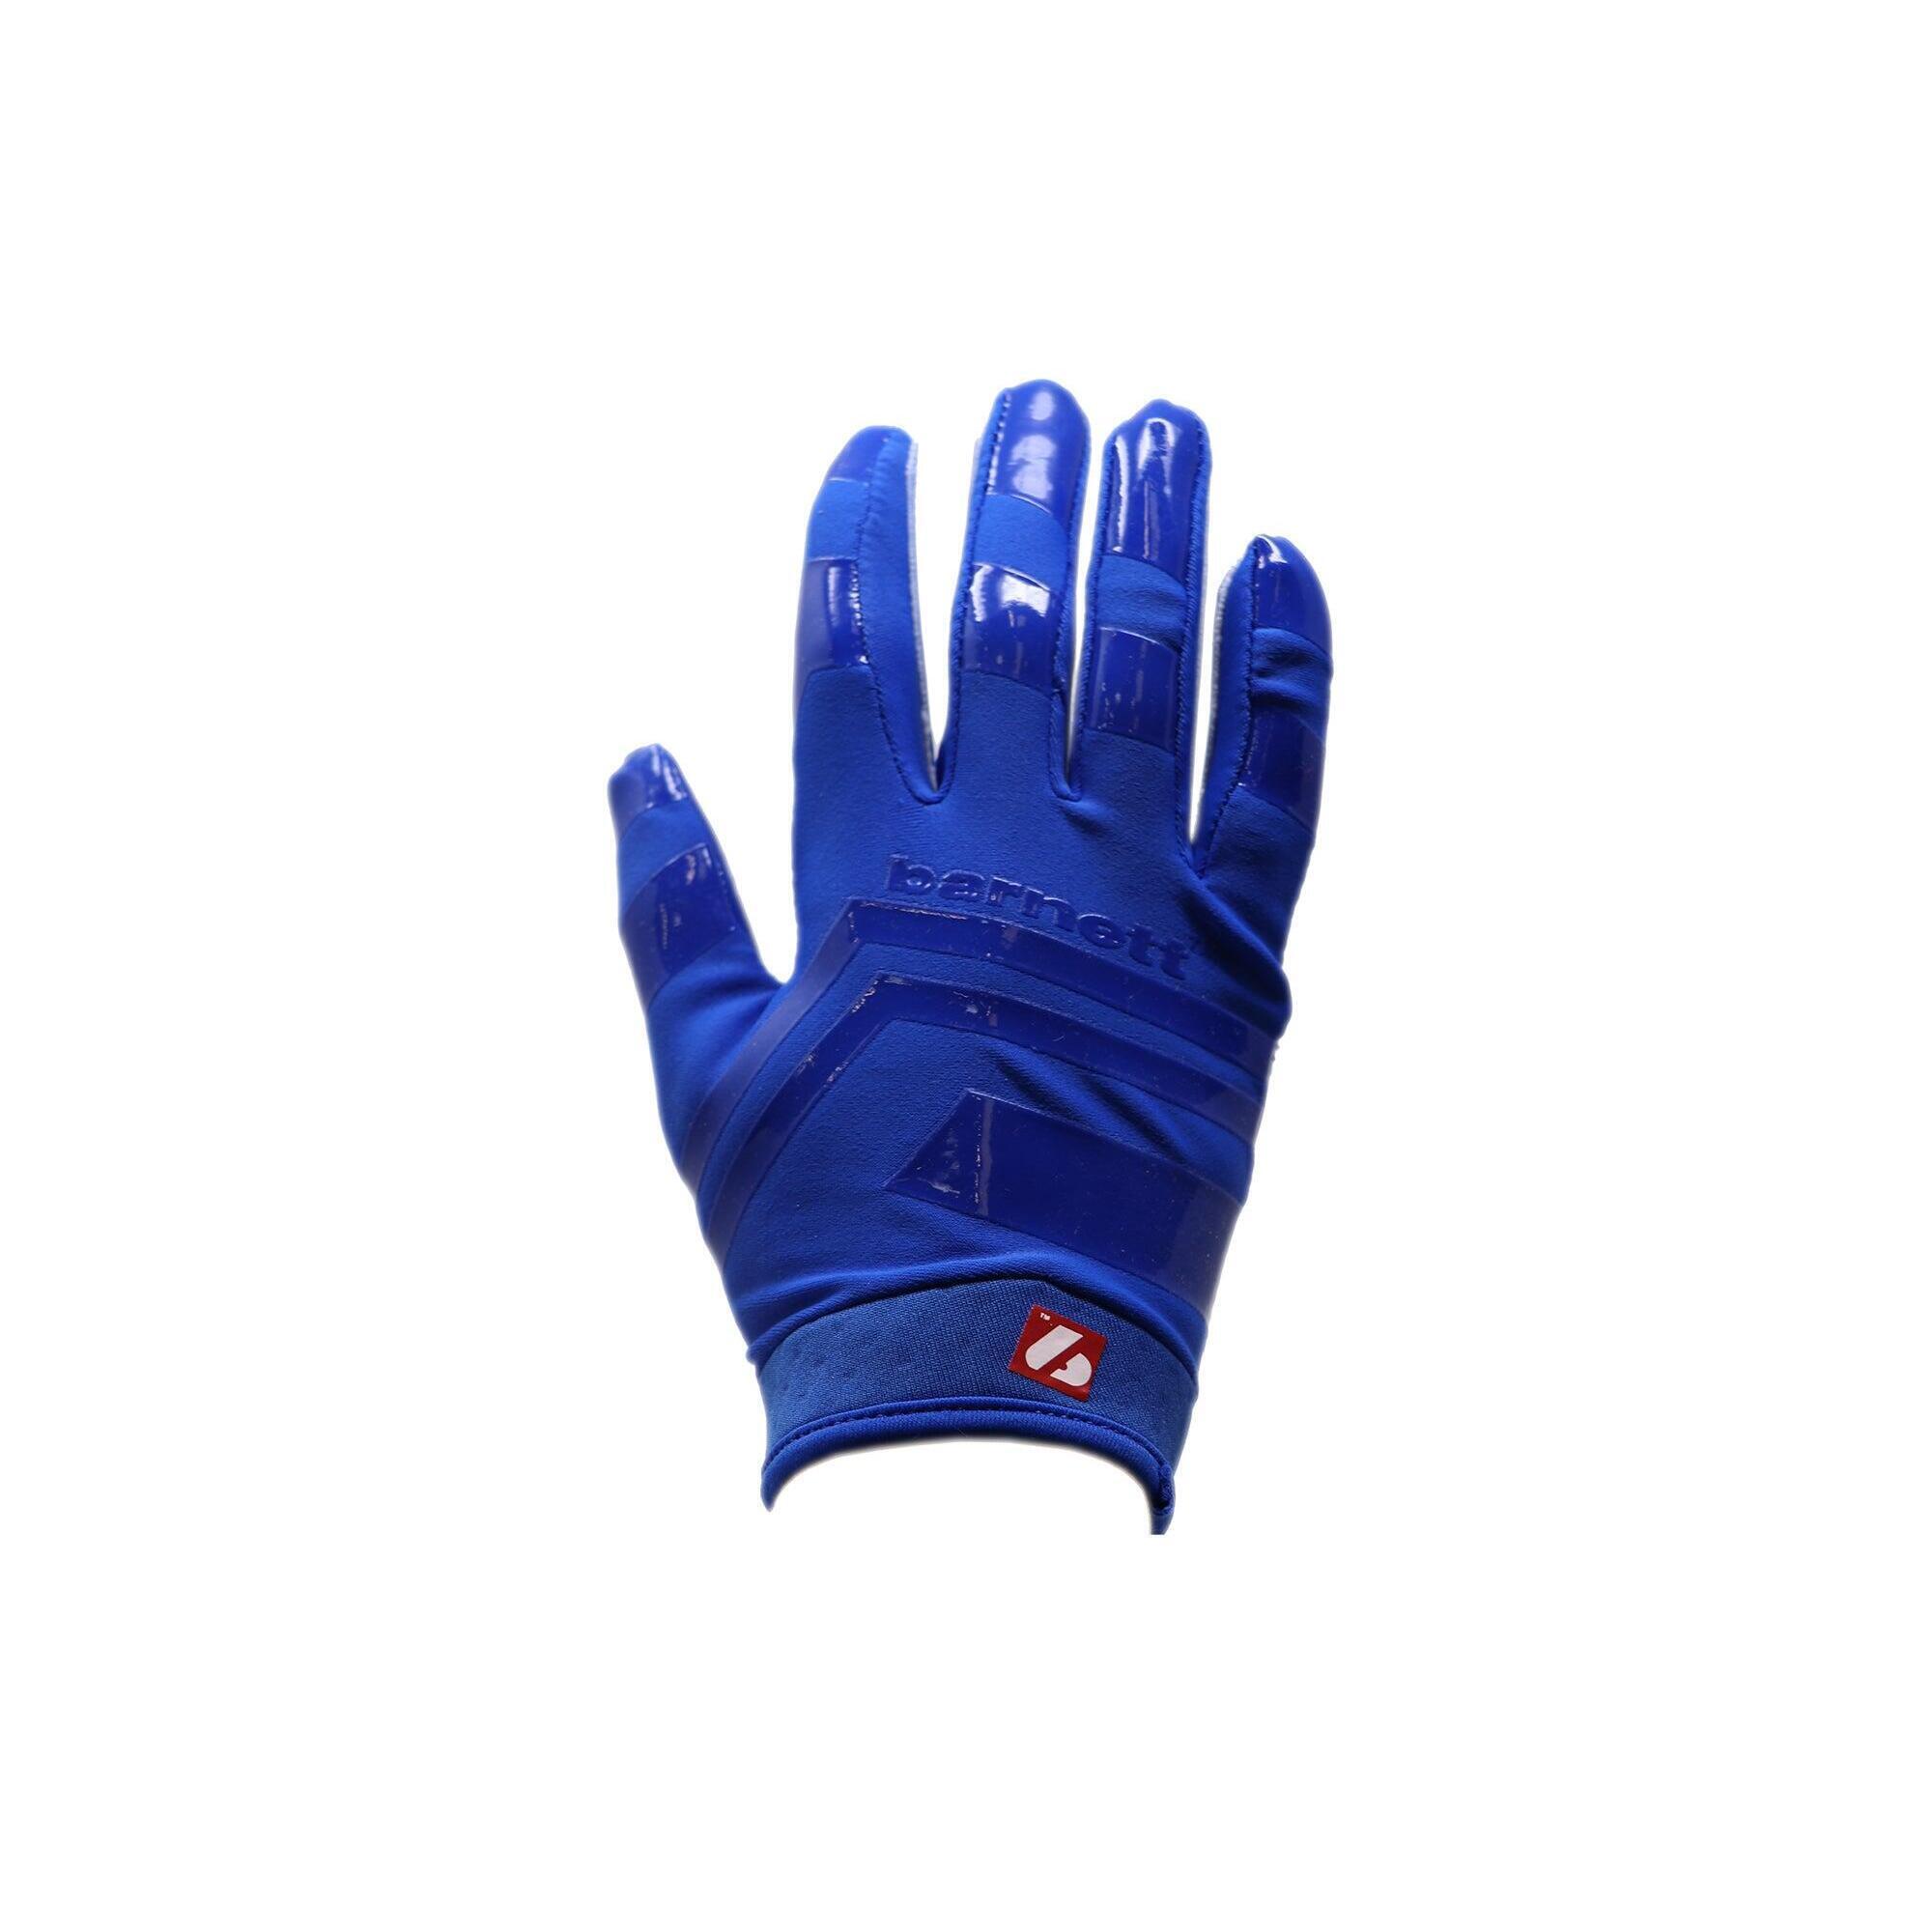  pro receiver american football gloves, RE,DB,RB, Blue FRG-03 2/5